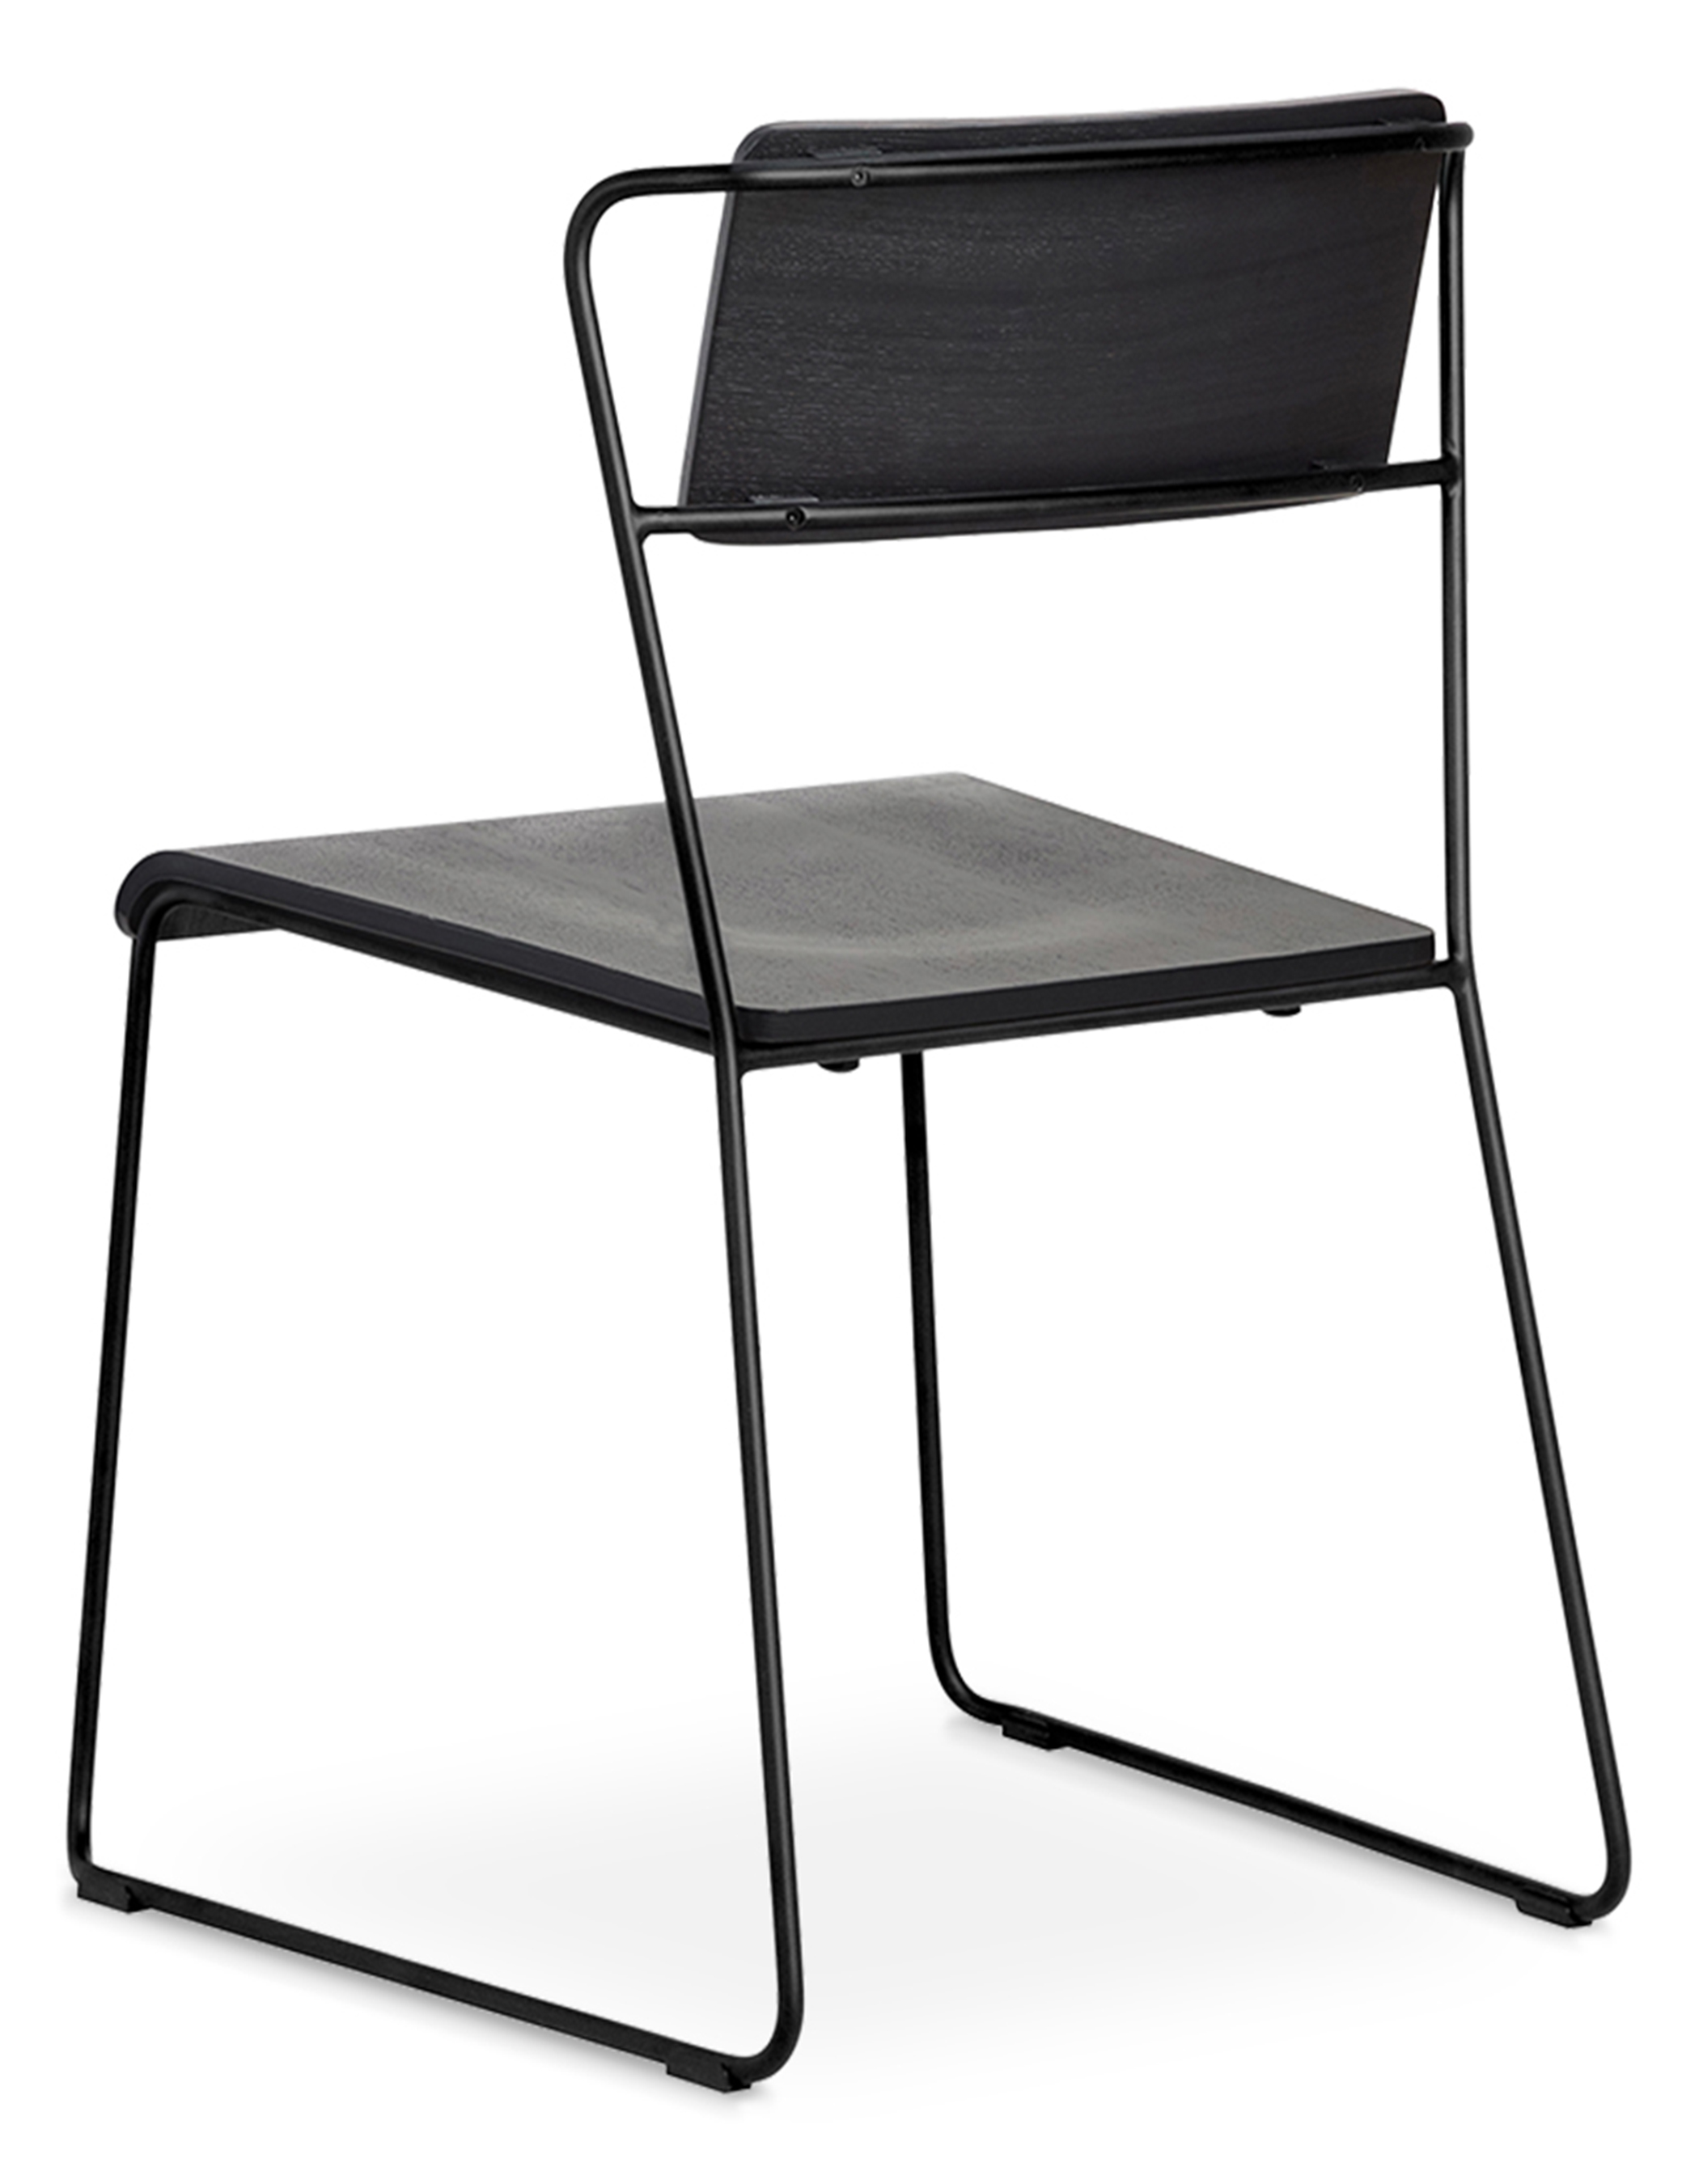 WS - Transit chair - Black ash (Back angle)